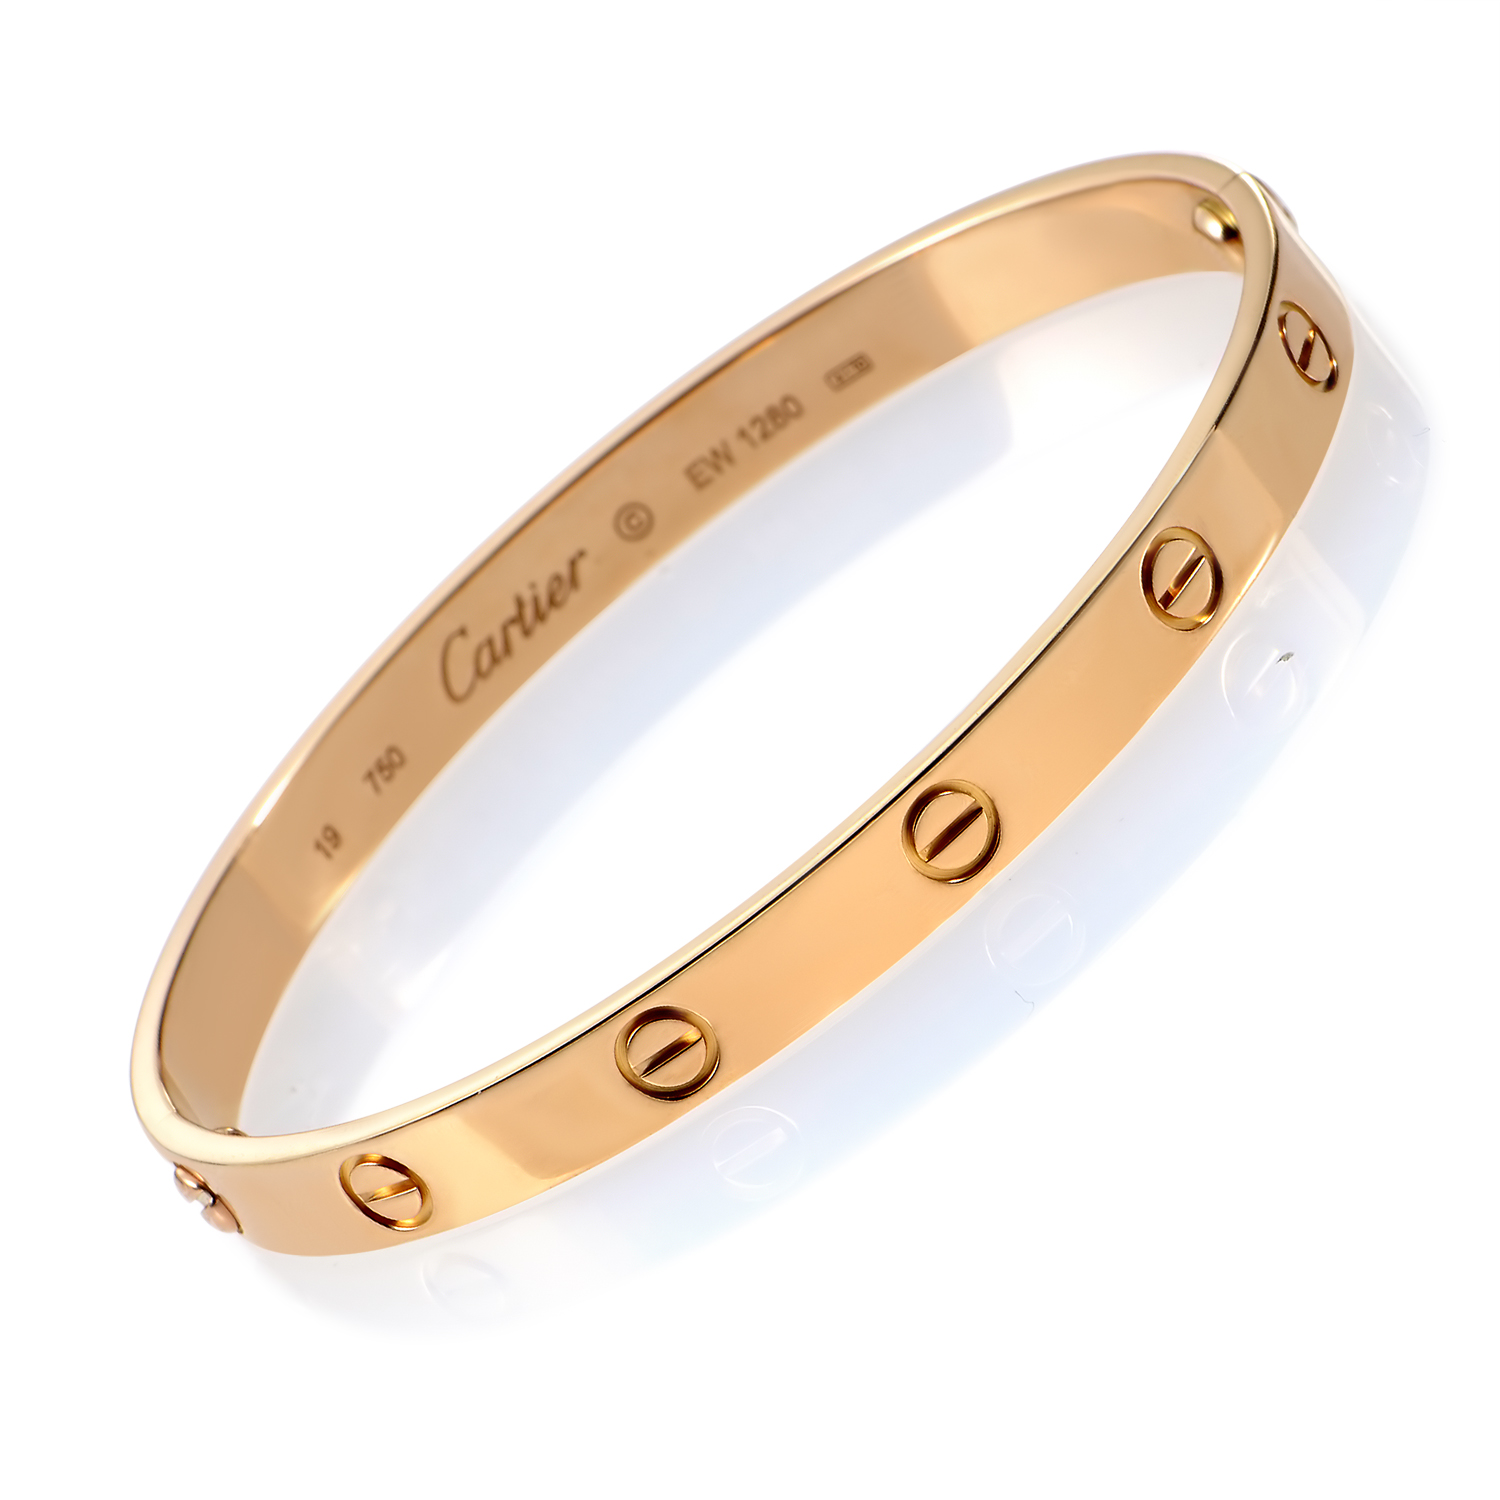 Cartier LOVE Women's 18K Rose Gold Bracelet Size 19 | eBay